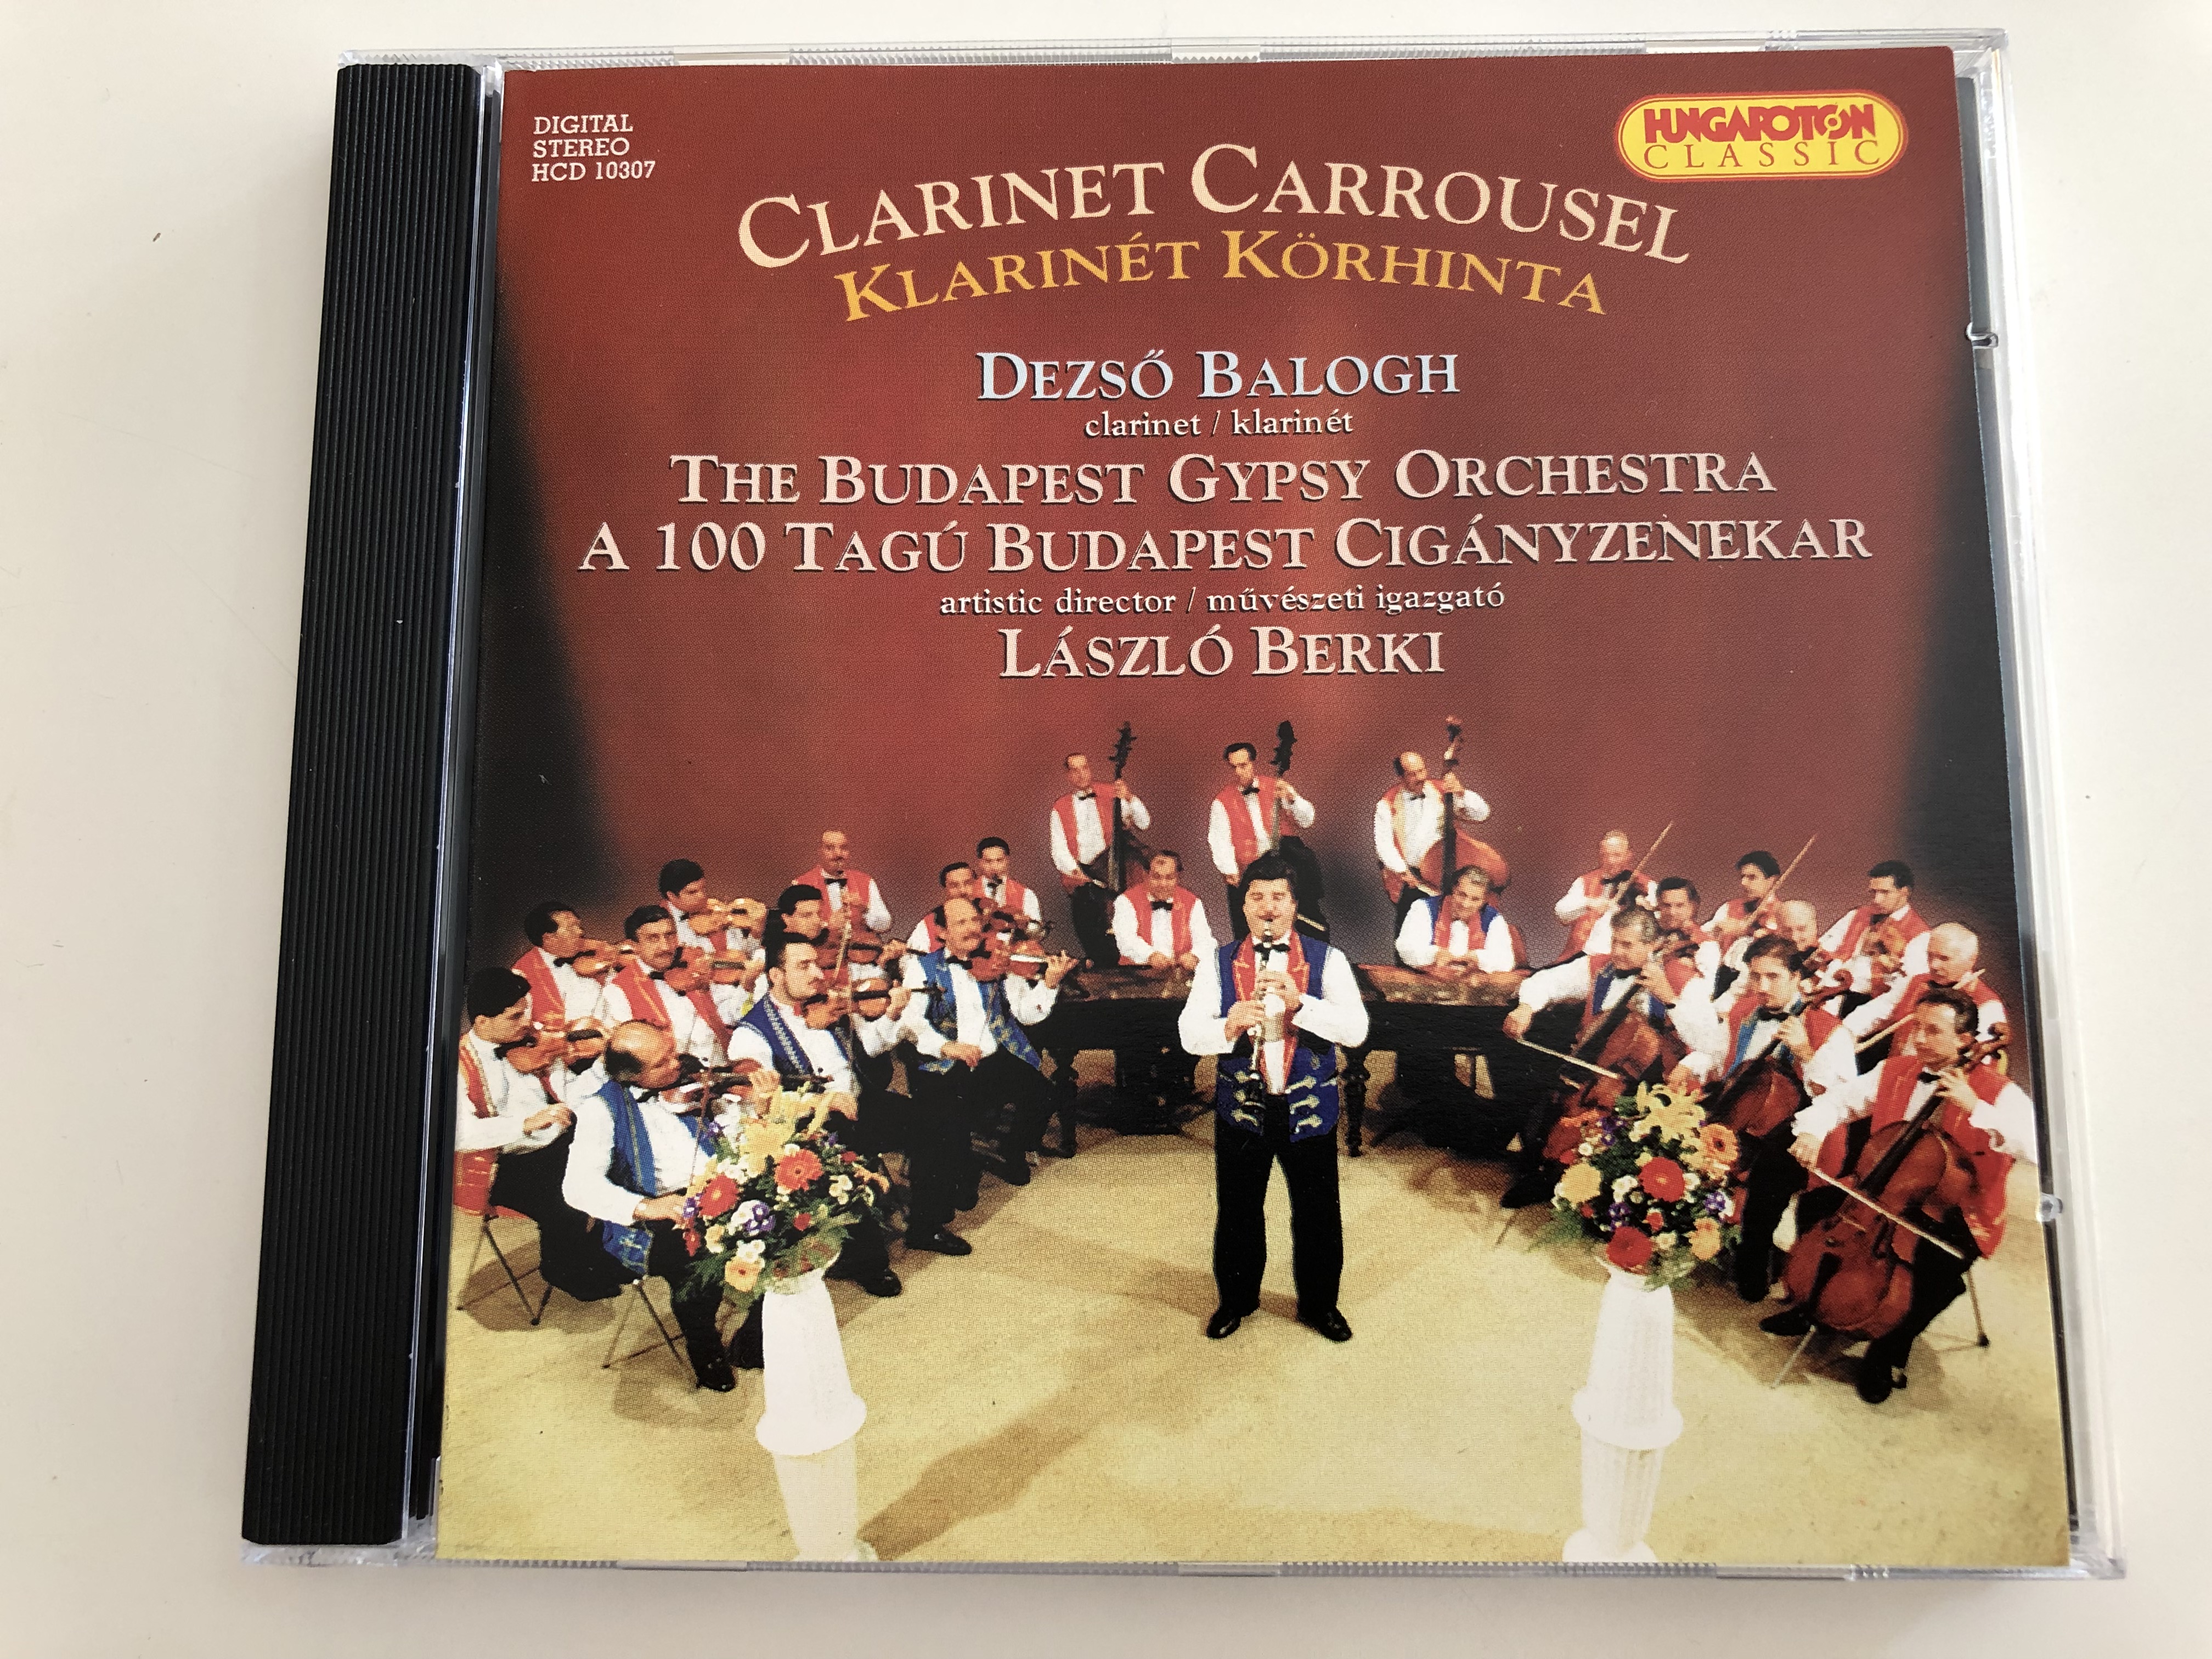 clarinet-carrousel-klarin-t-k-rhinta-dezs-balogh-clarinet-the-budapest-gypsy-orchestra-art-director-l-szl-berki-hungaroton-classic-audio-cd-2000-hcd-10307-1-.jpg